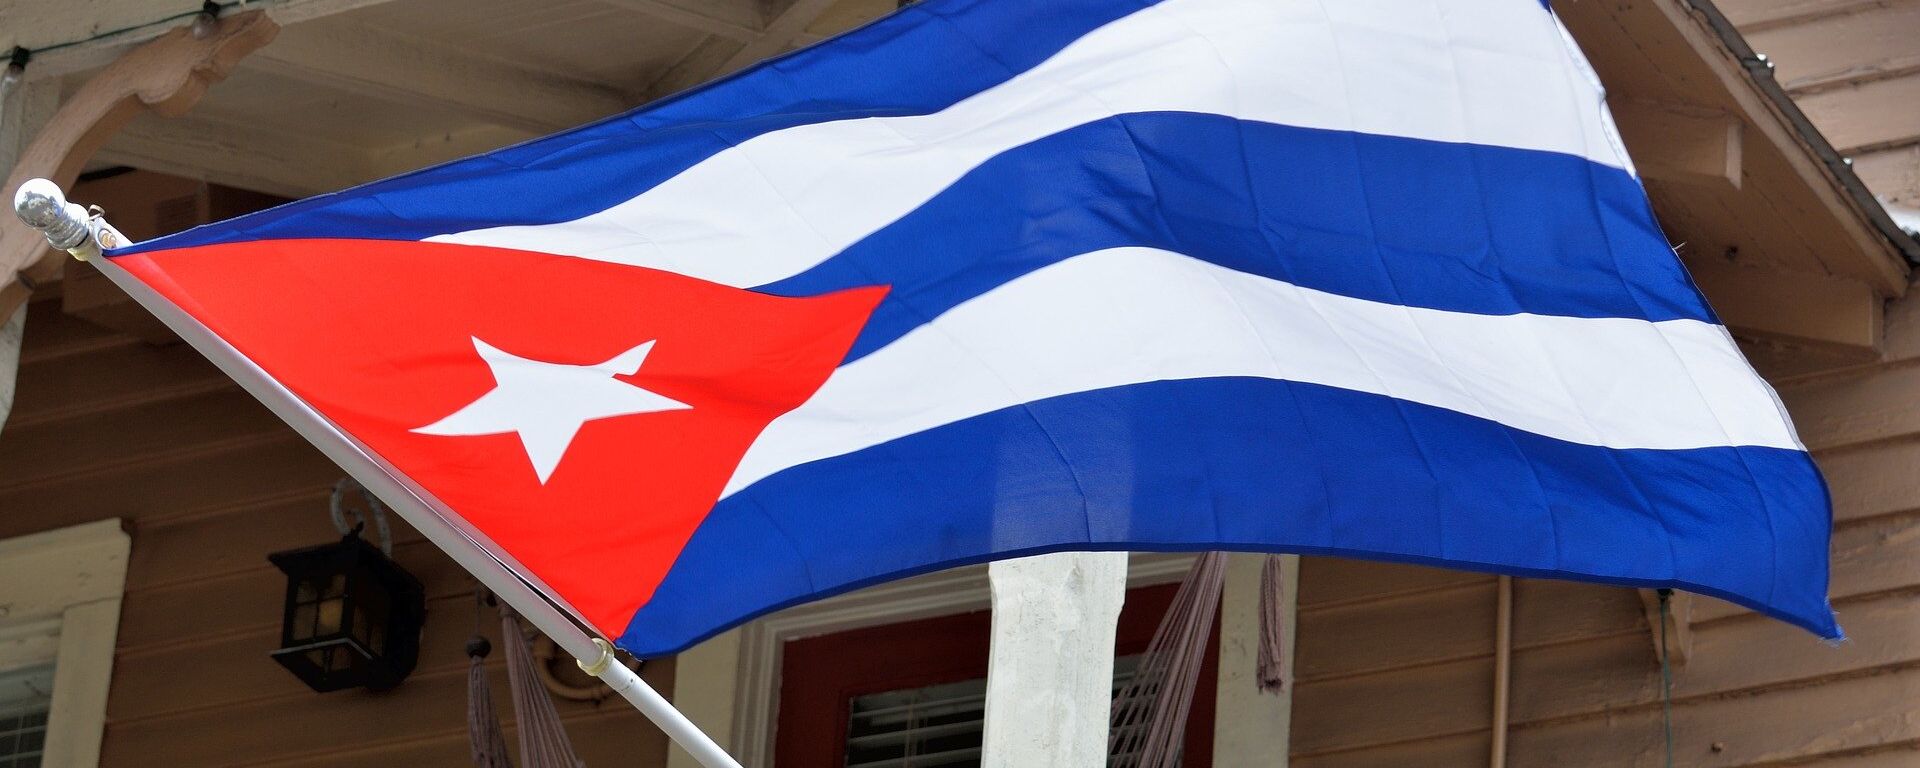 La bandera de Cuba - Sputnik Mundo, 1920, 24.07.2021